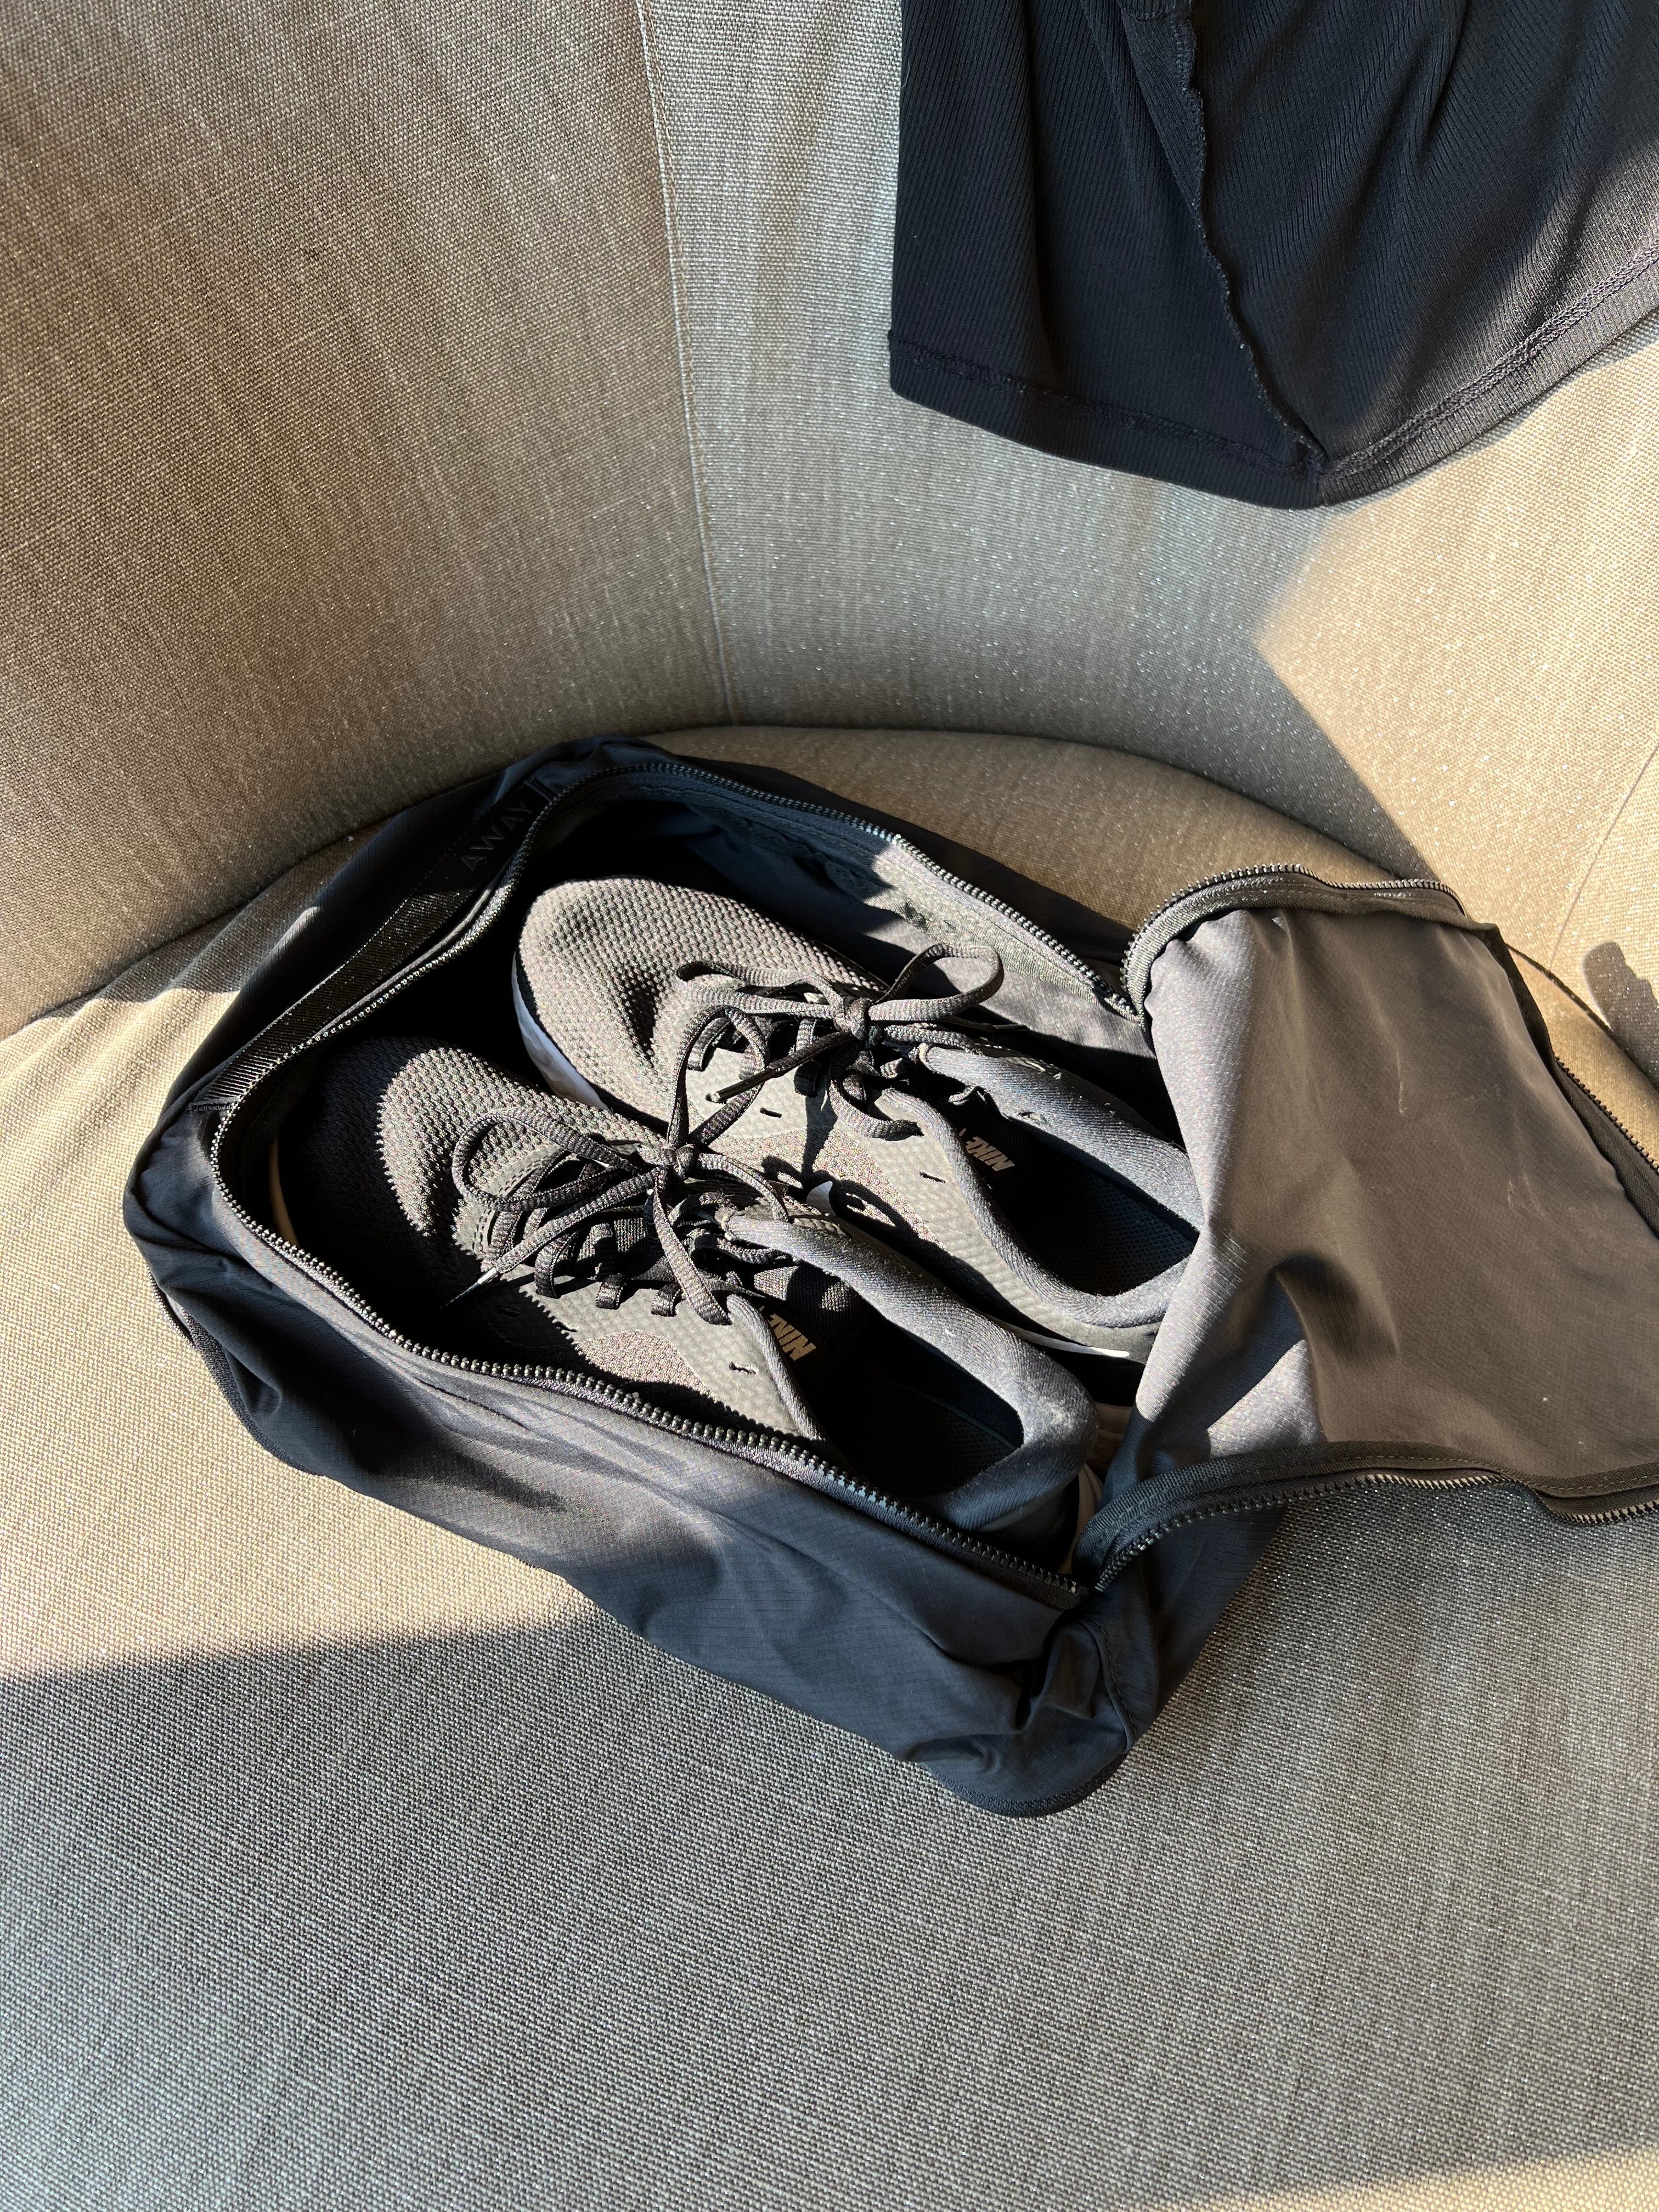 The Perfect Travel Bag - Frank Clegg - The Shoe Snob Blog